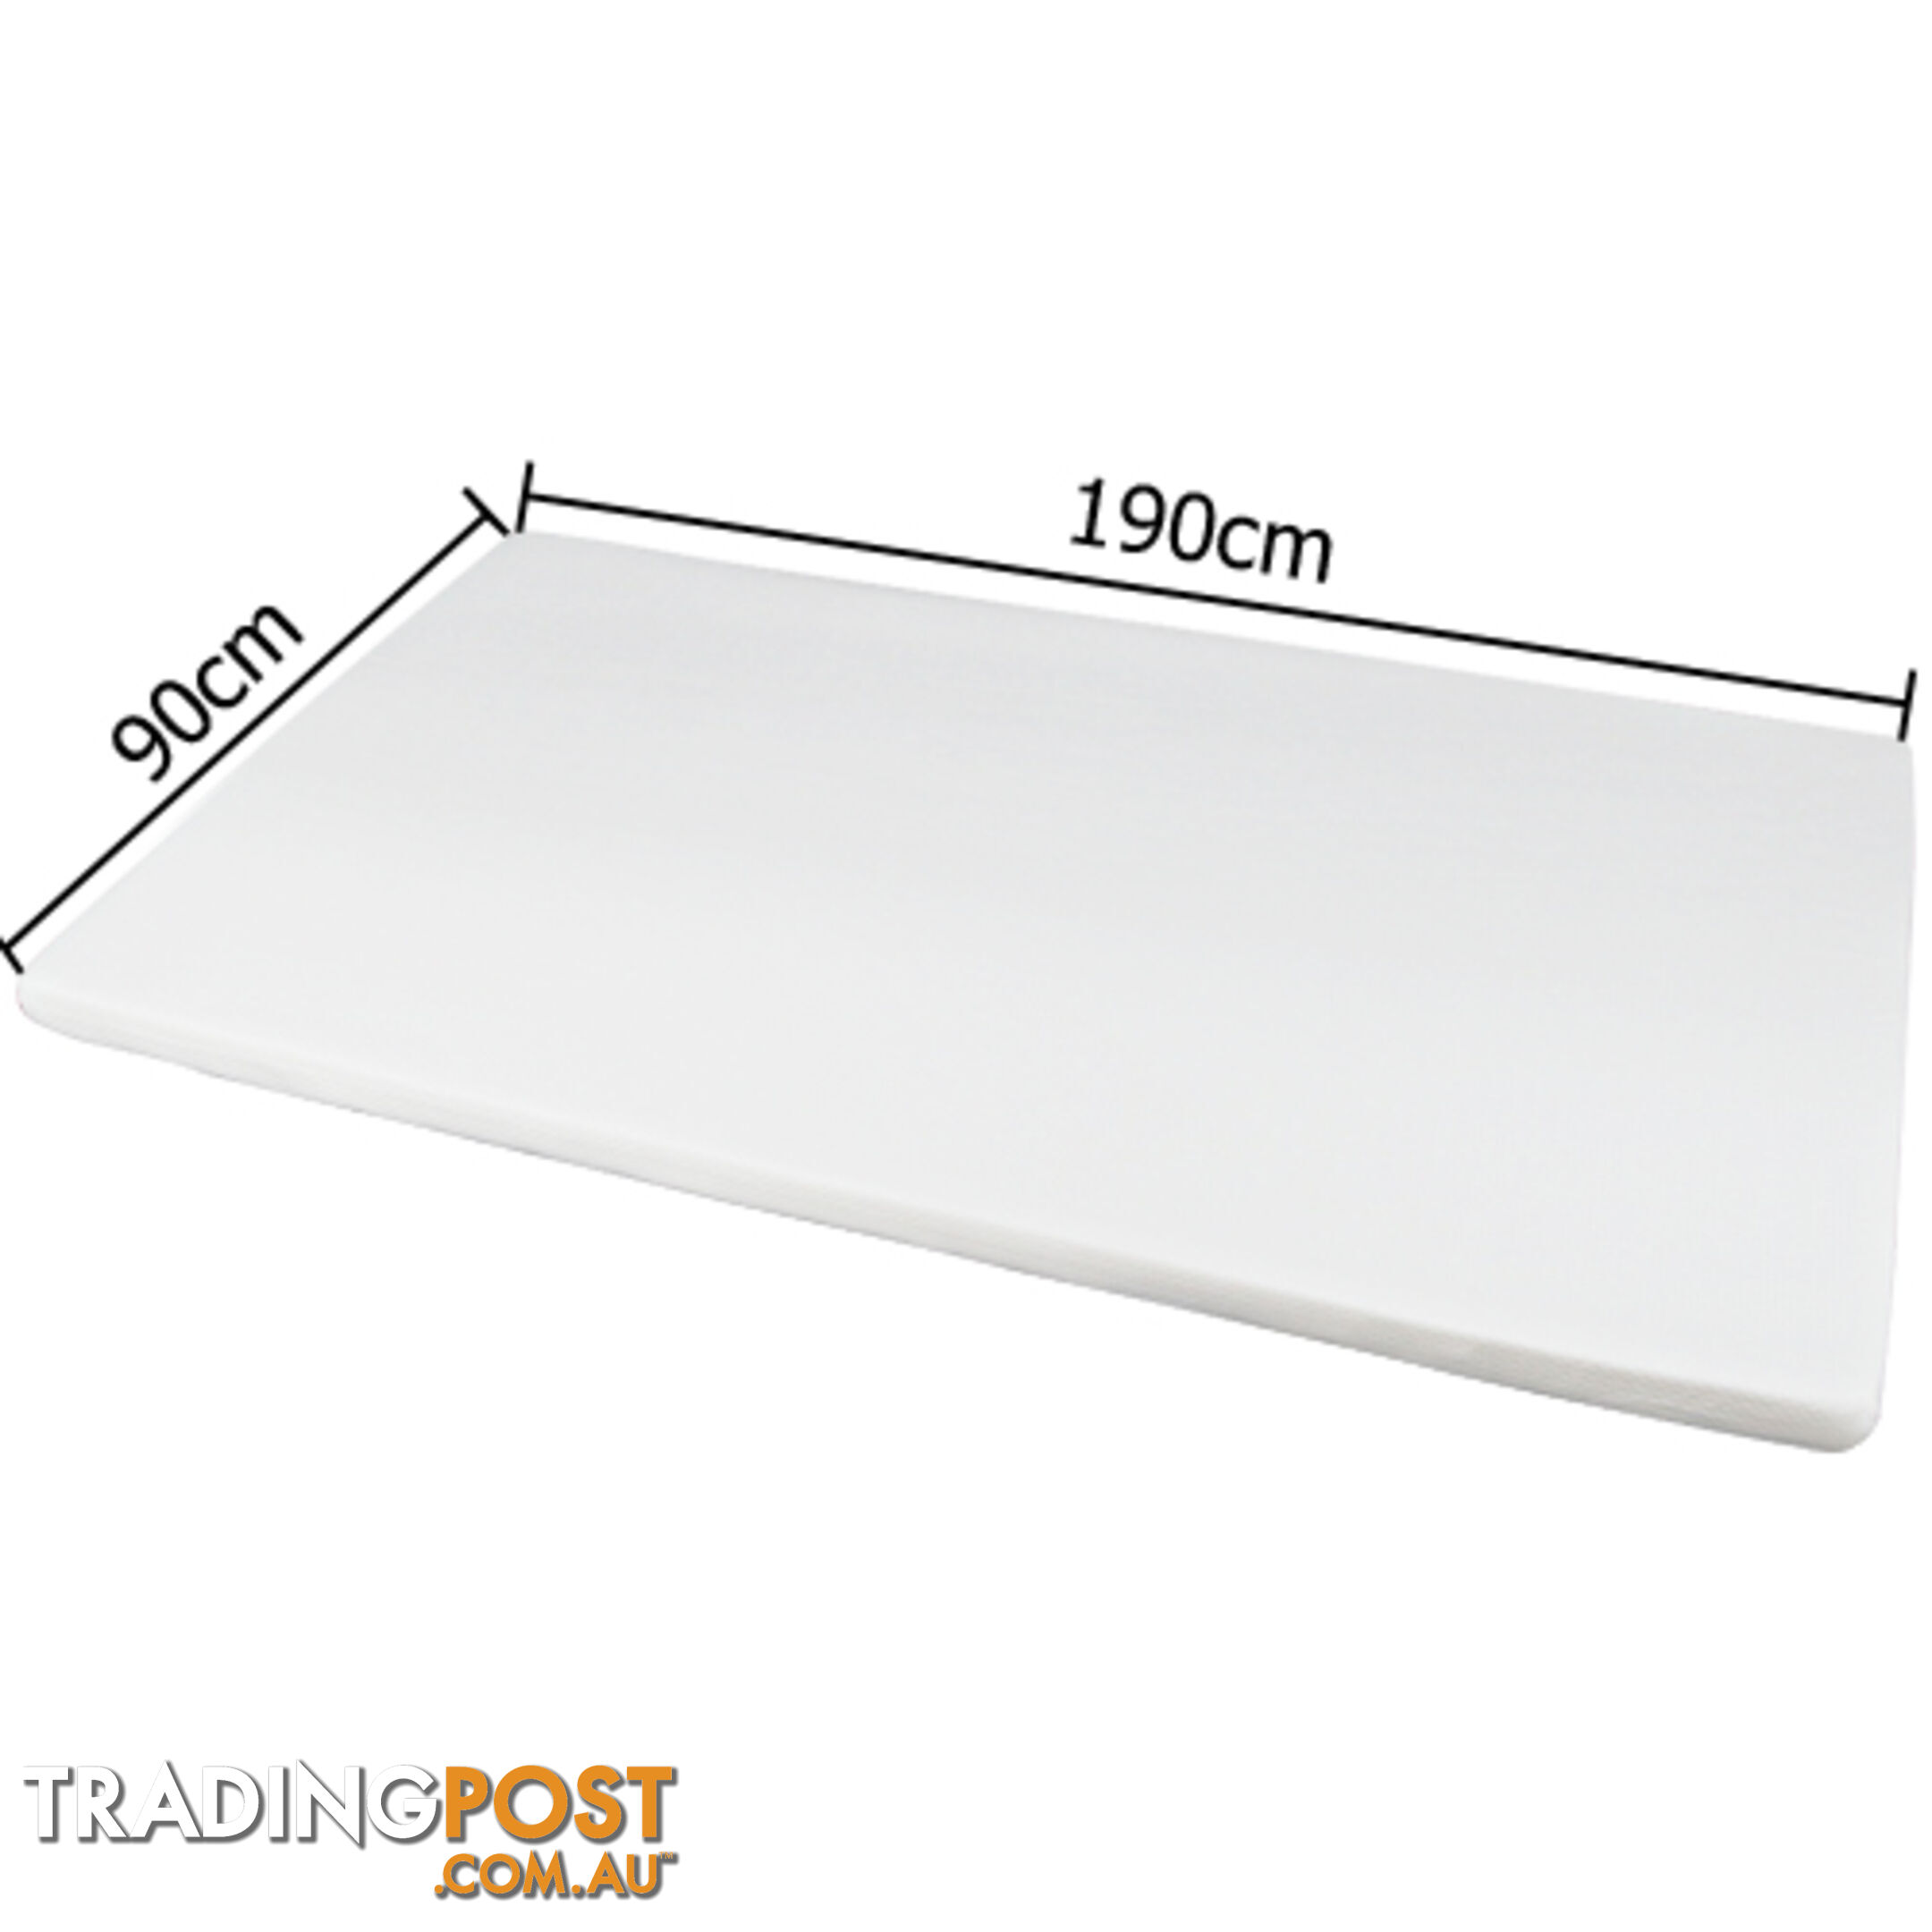 5cm Visco Elastic Memory Foam Mattress Topper Extra High Density Underlay Single